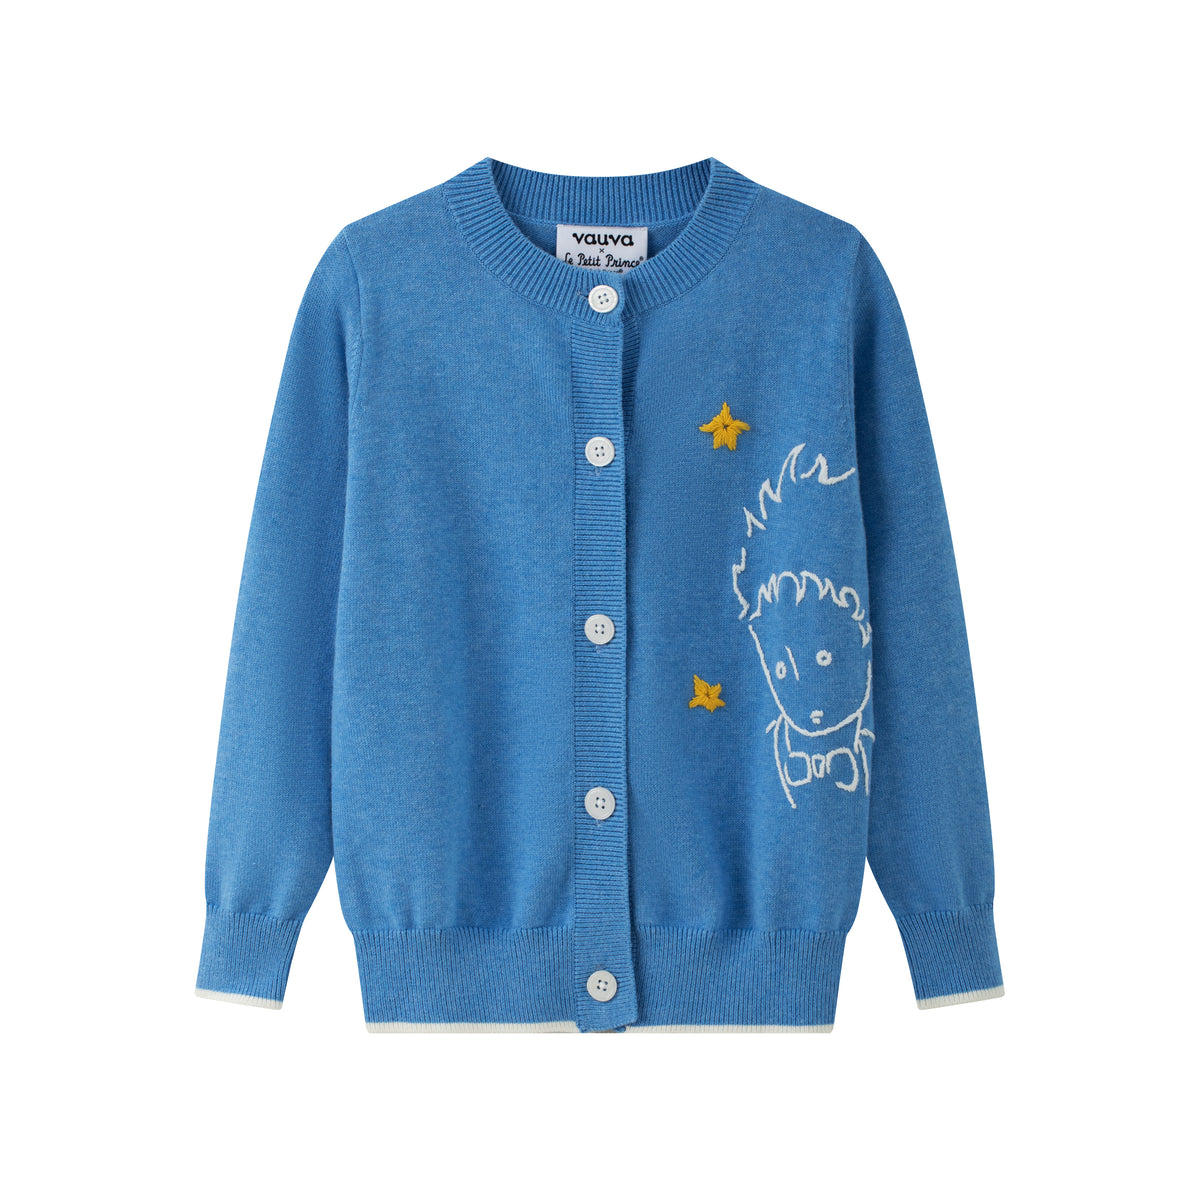 Vauva x Le Petit Prince - Kids Cashmere Cardigan (Blue)